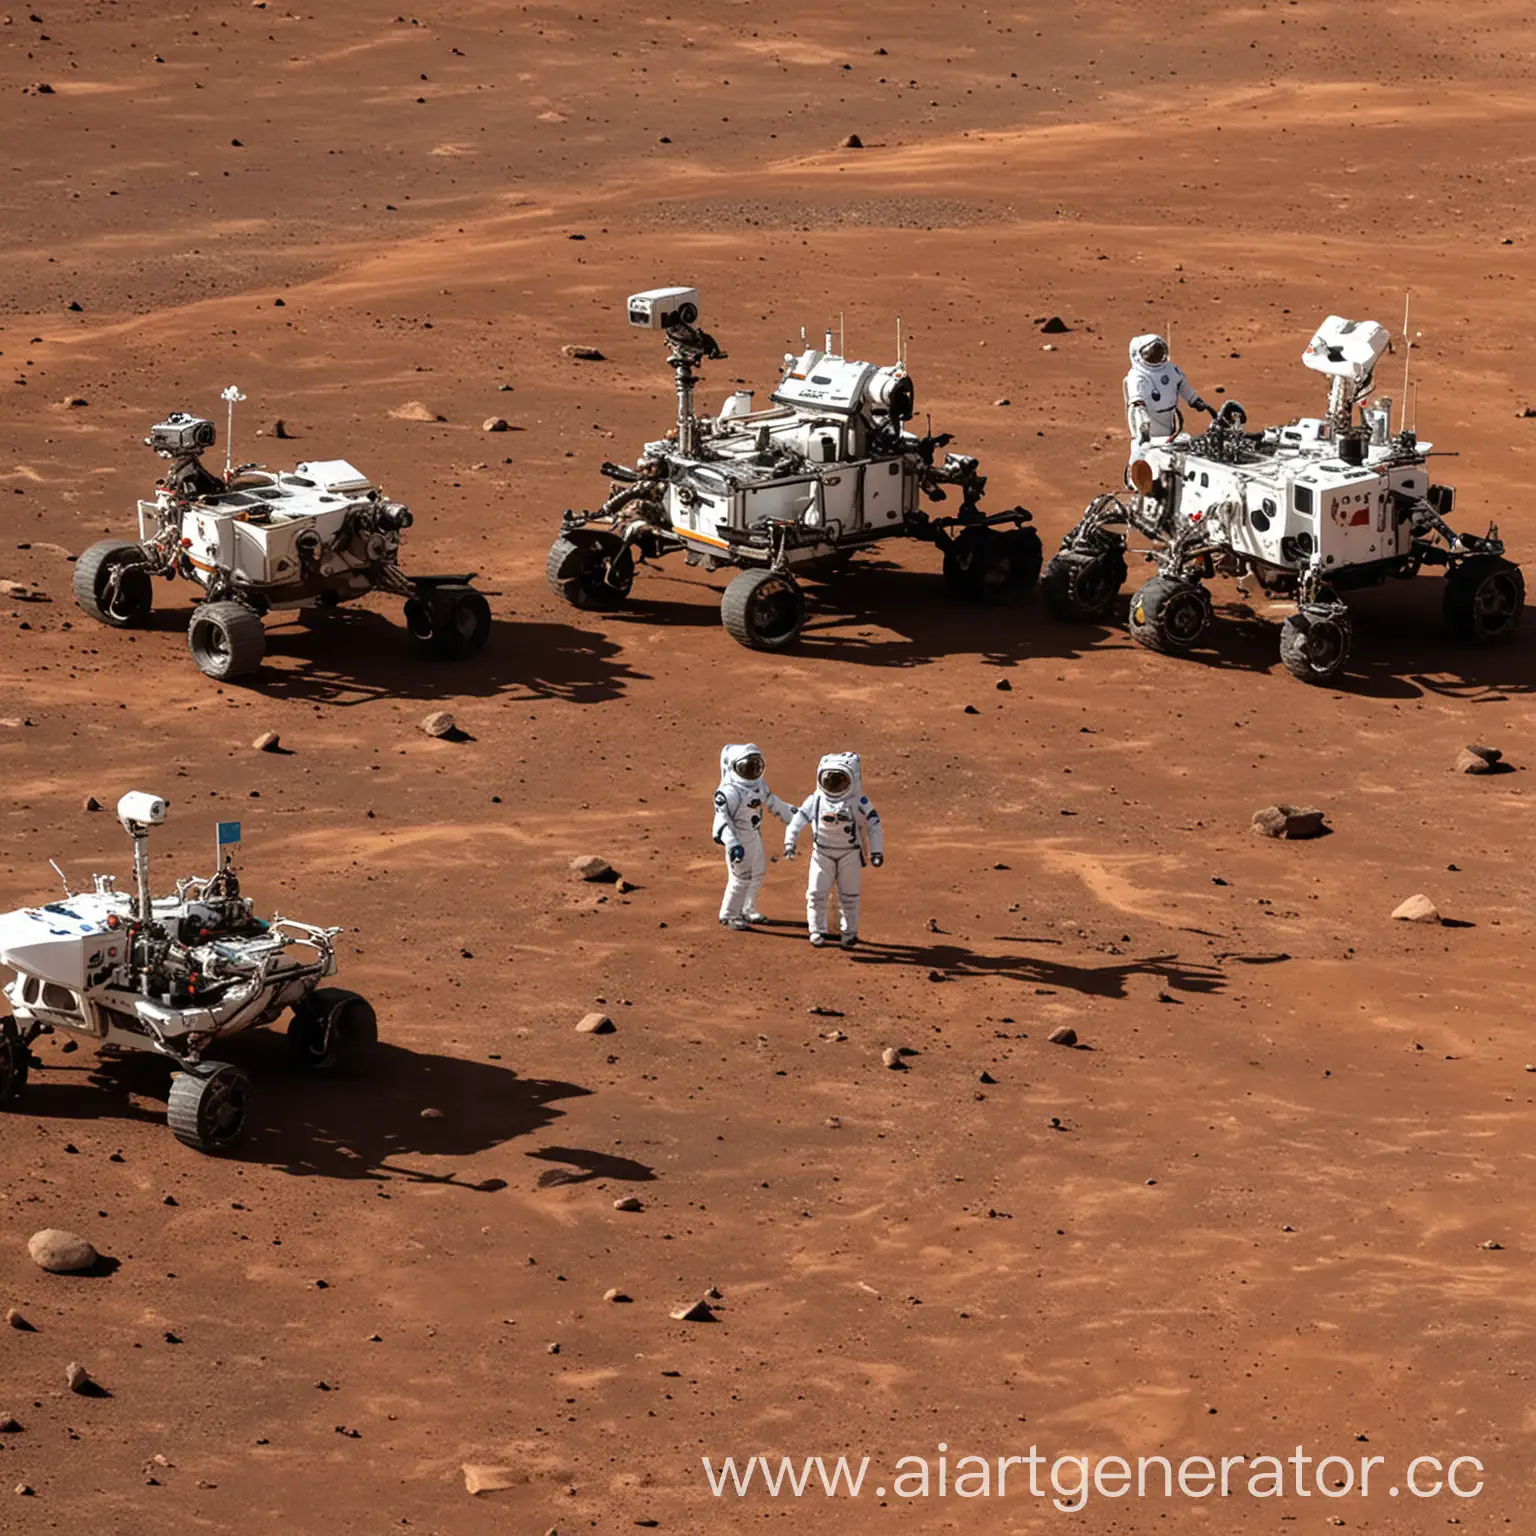 Kazakh-Astronauts-and-Robots-Exploring-Mars